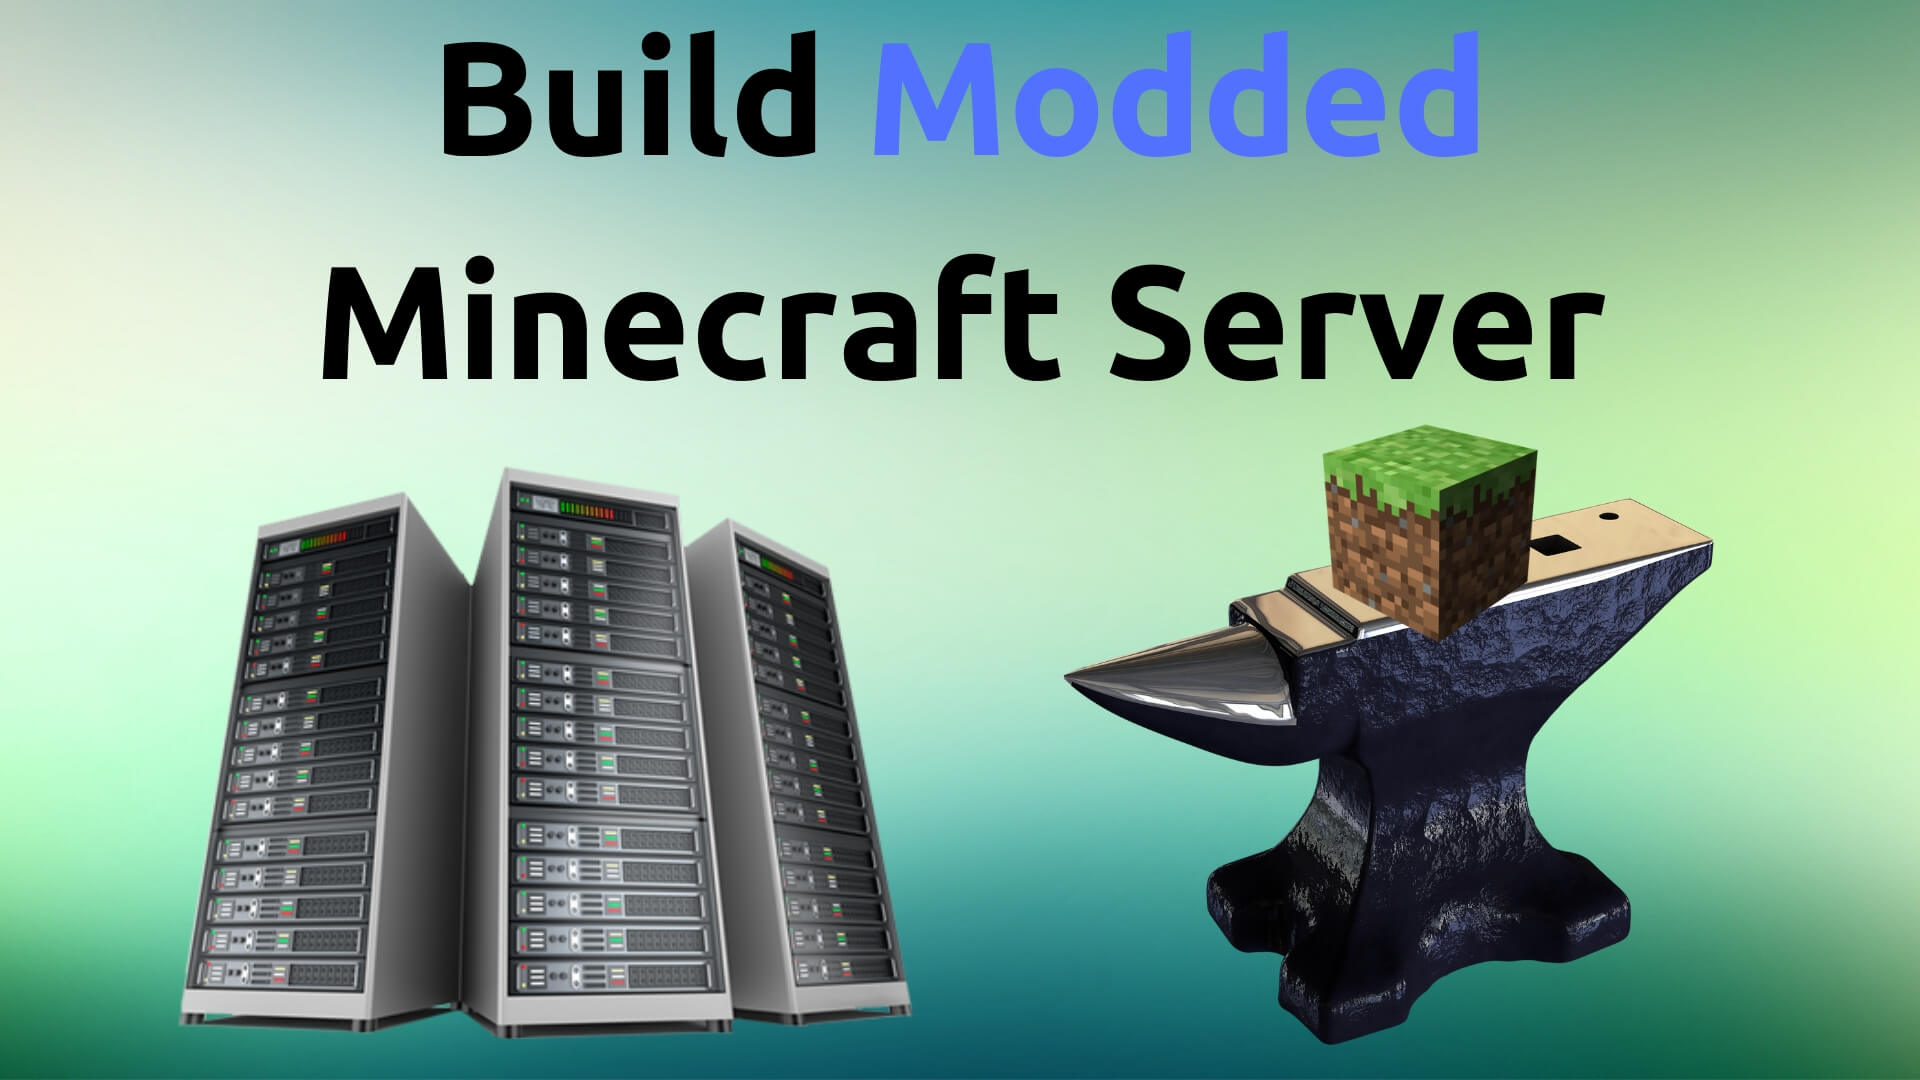 minecraft create modded server